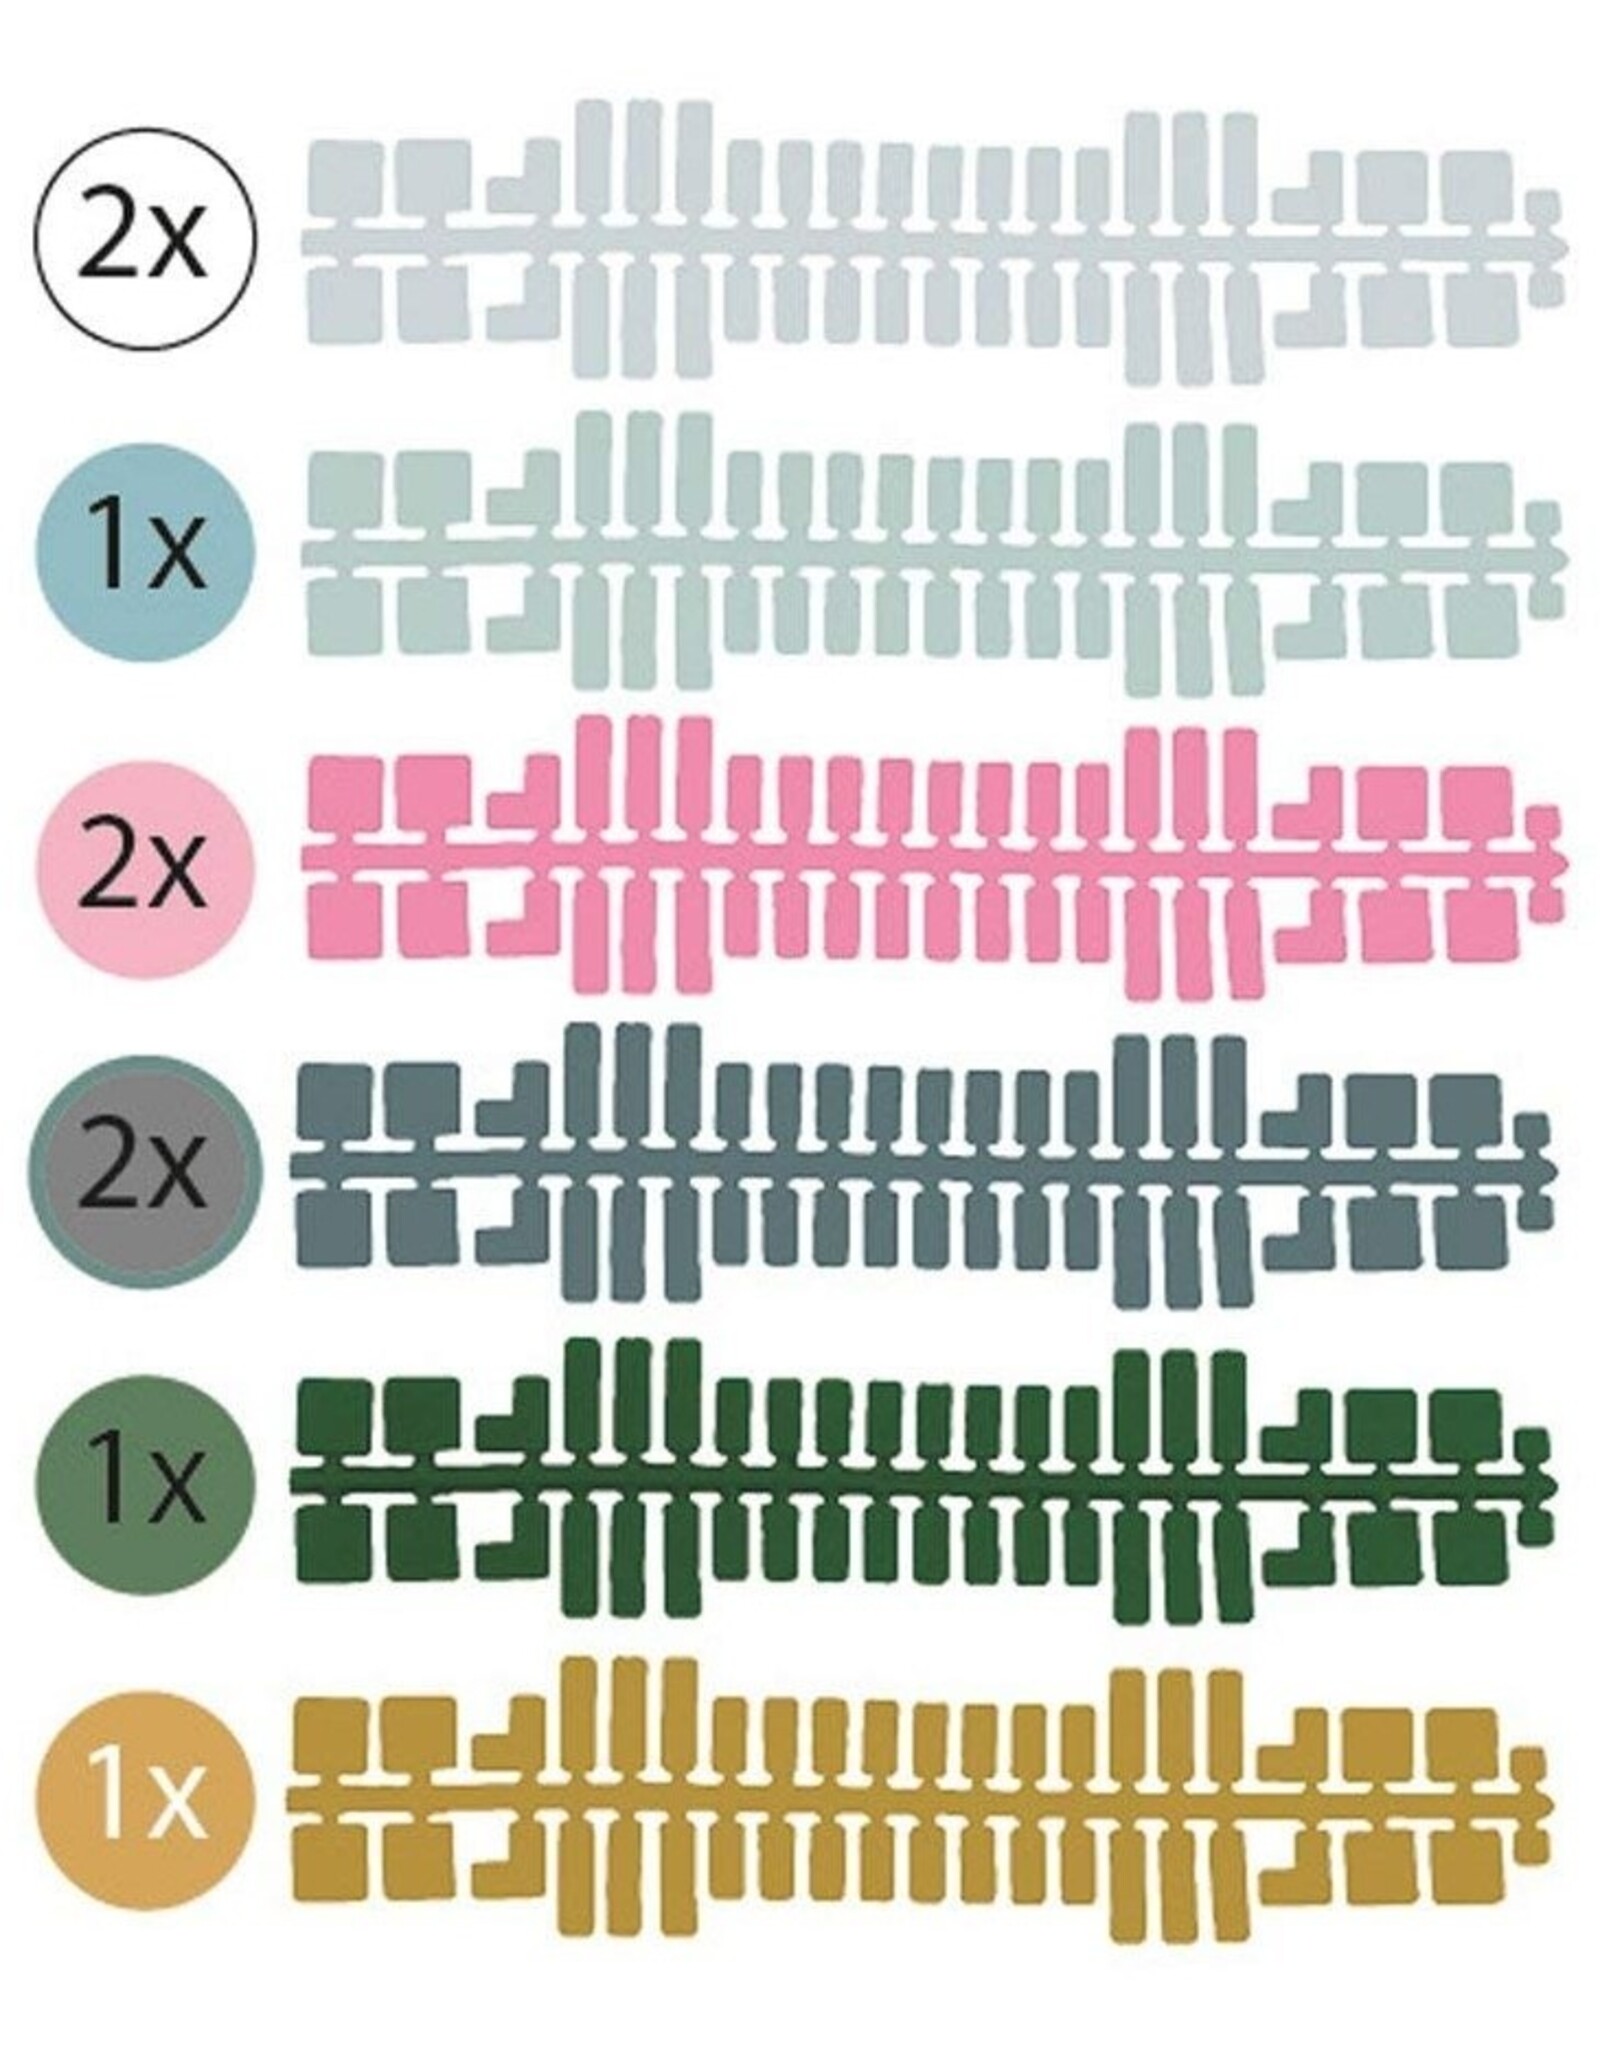 Ministeck Feuchtmann - Ministeck standard color strips (set 3)